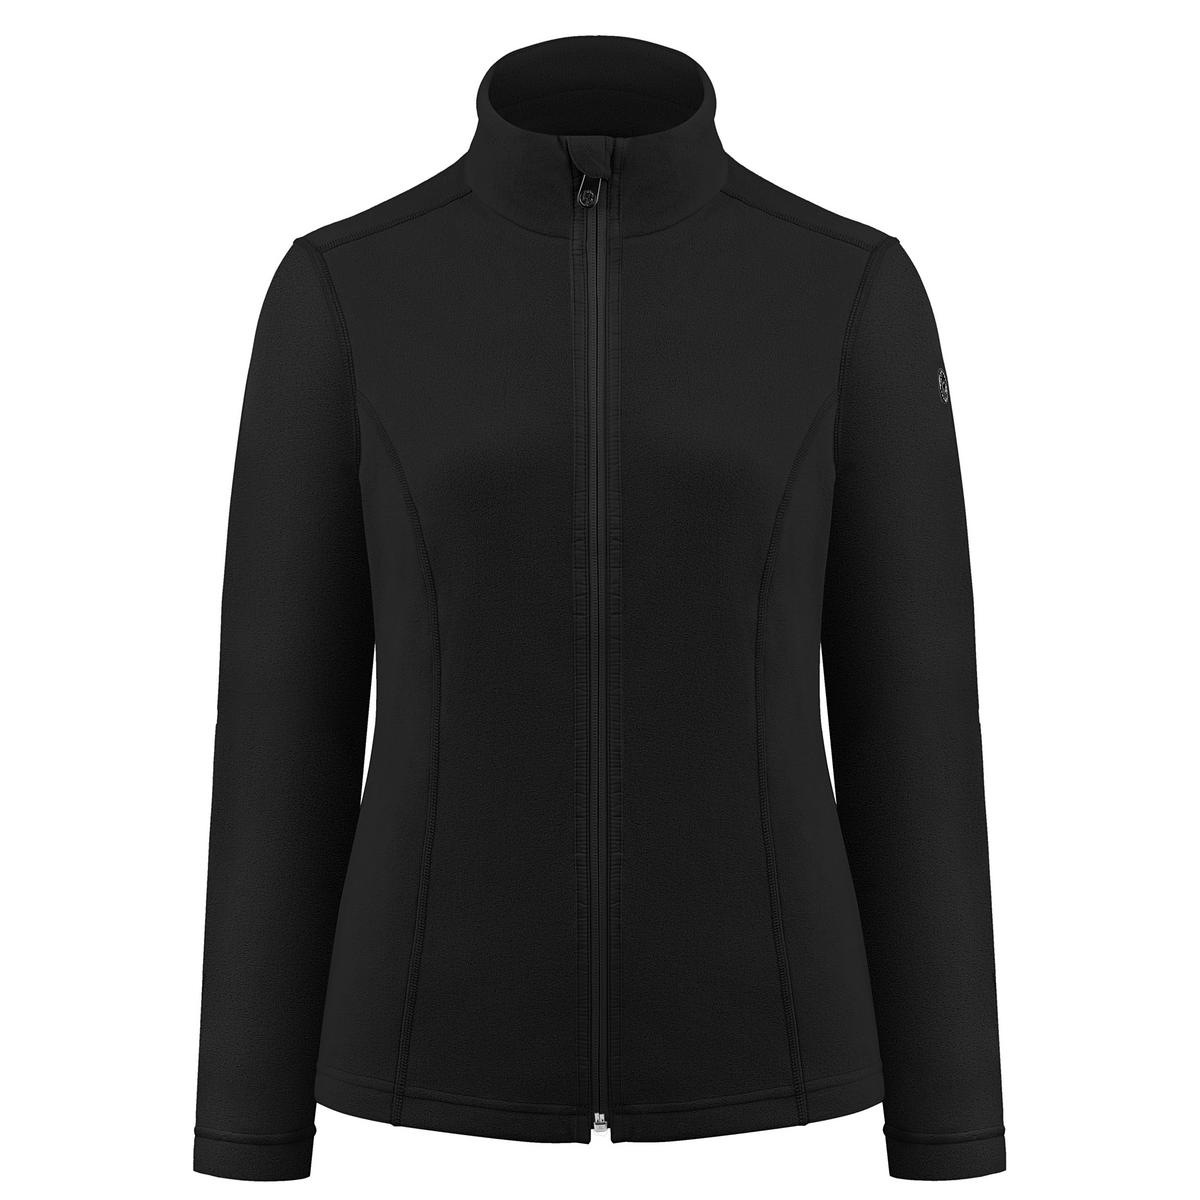 Poivre Blanc Women's Micro Fleece Jacket - Black